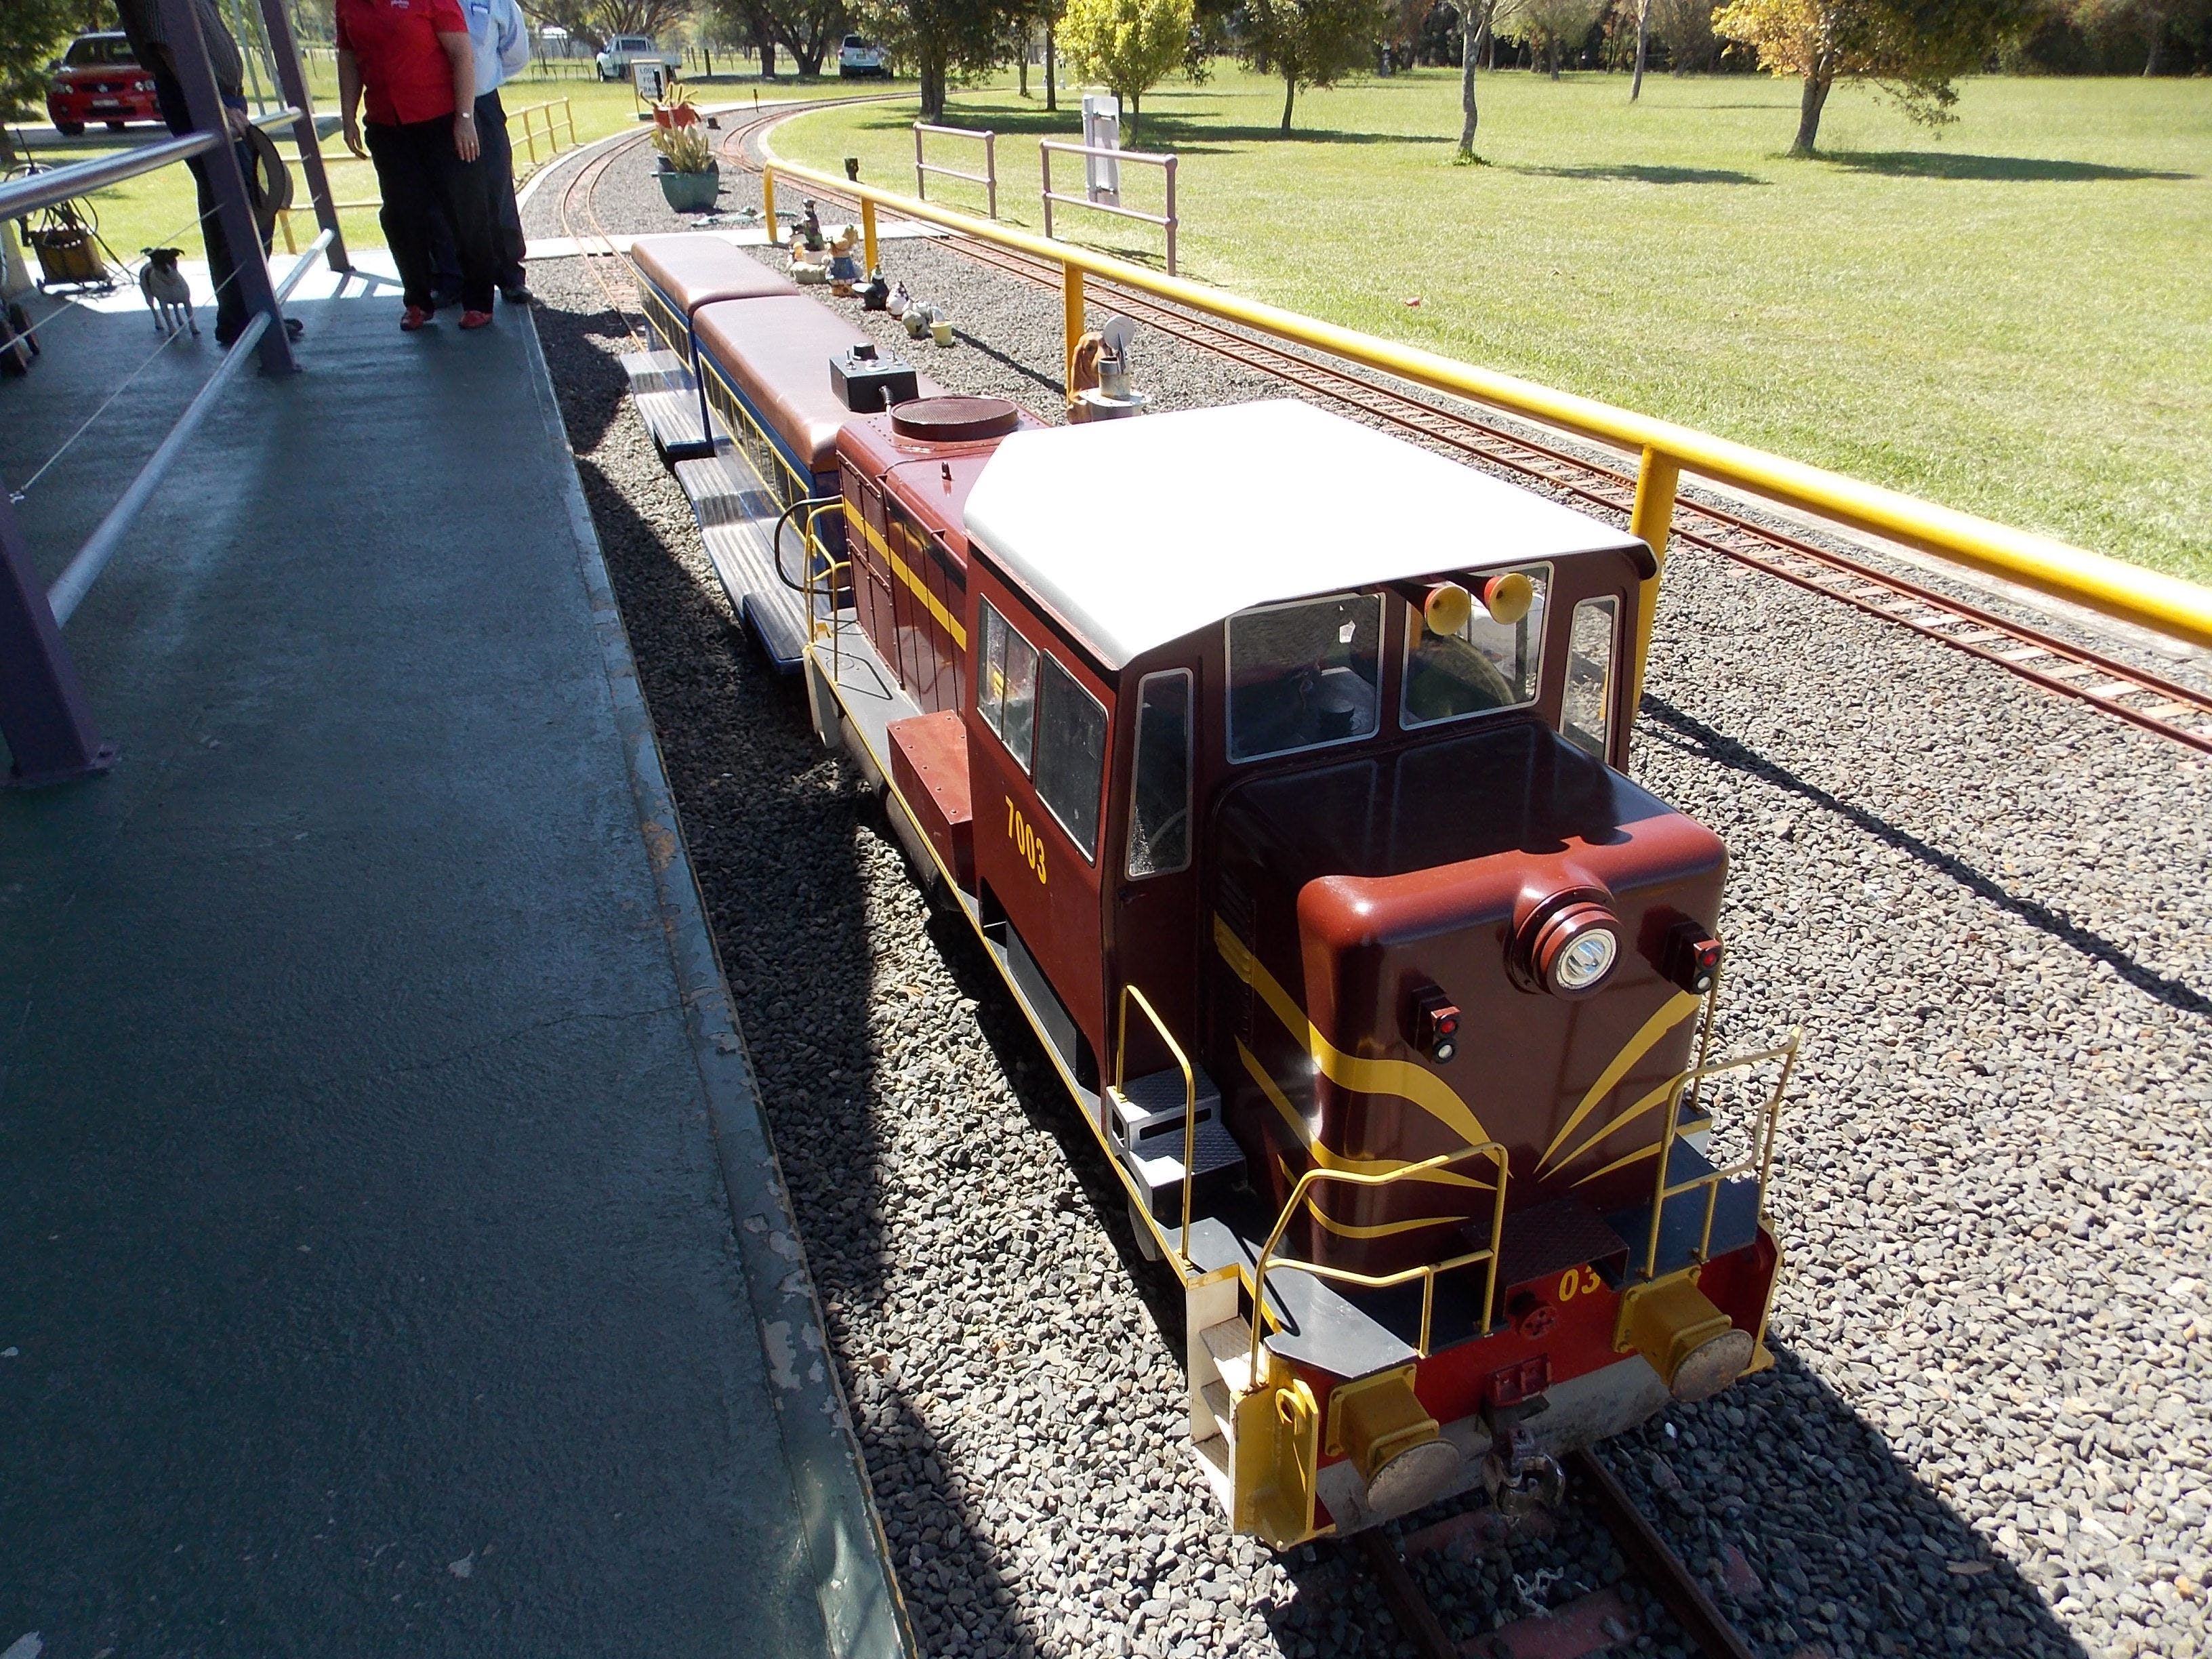 Penwood Miniature Railway - WA Accommodation